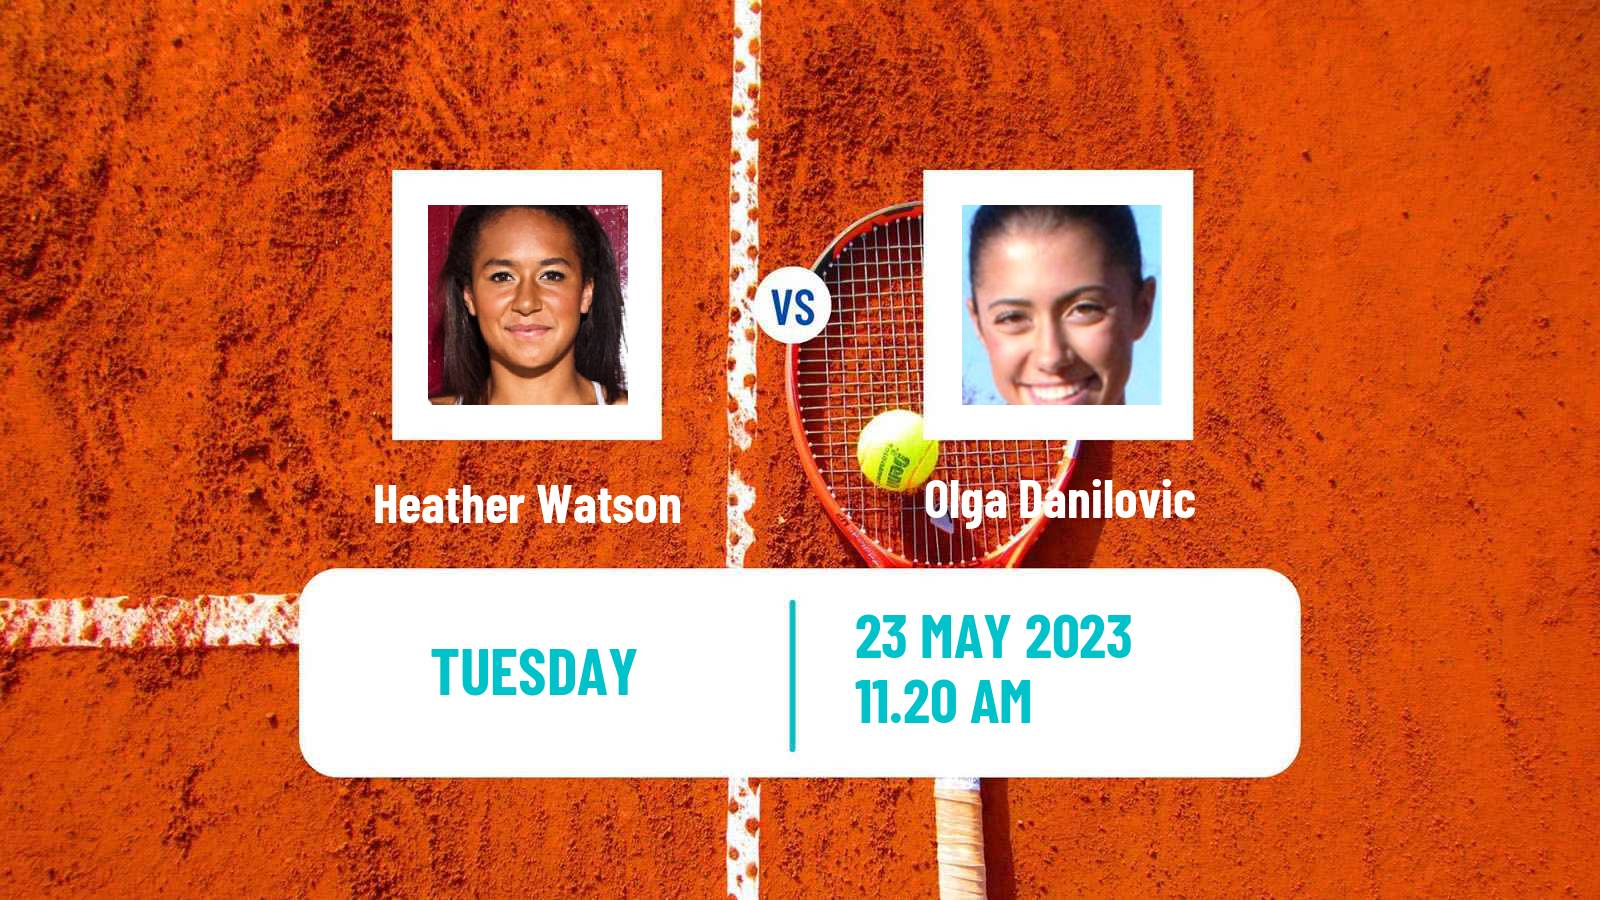 Tennis WTA Roland Garros Heather Watson - Olga Danilovic